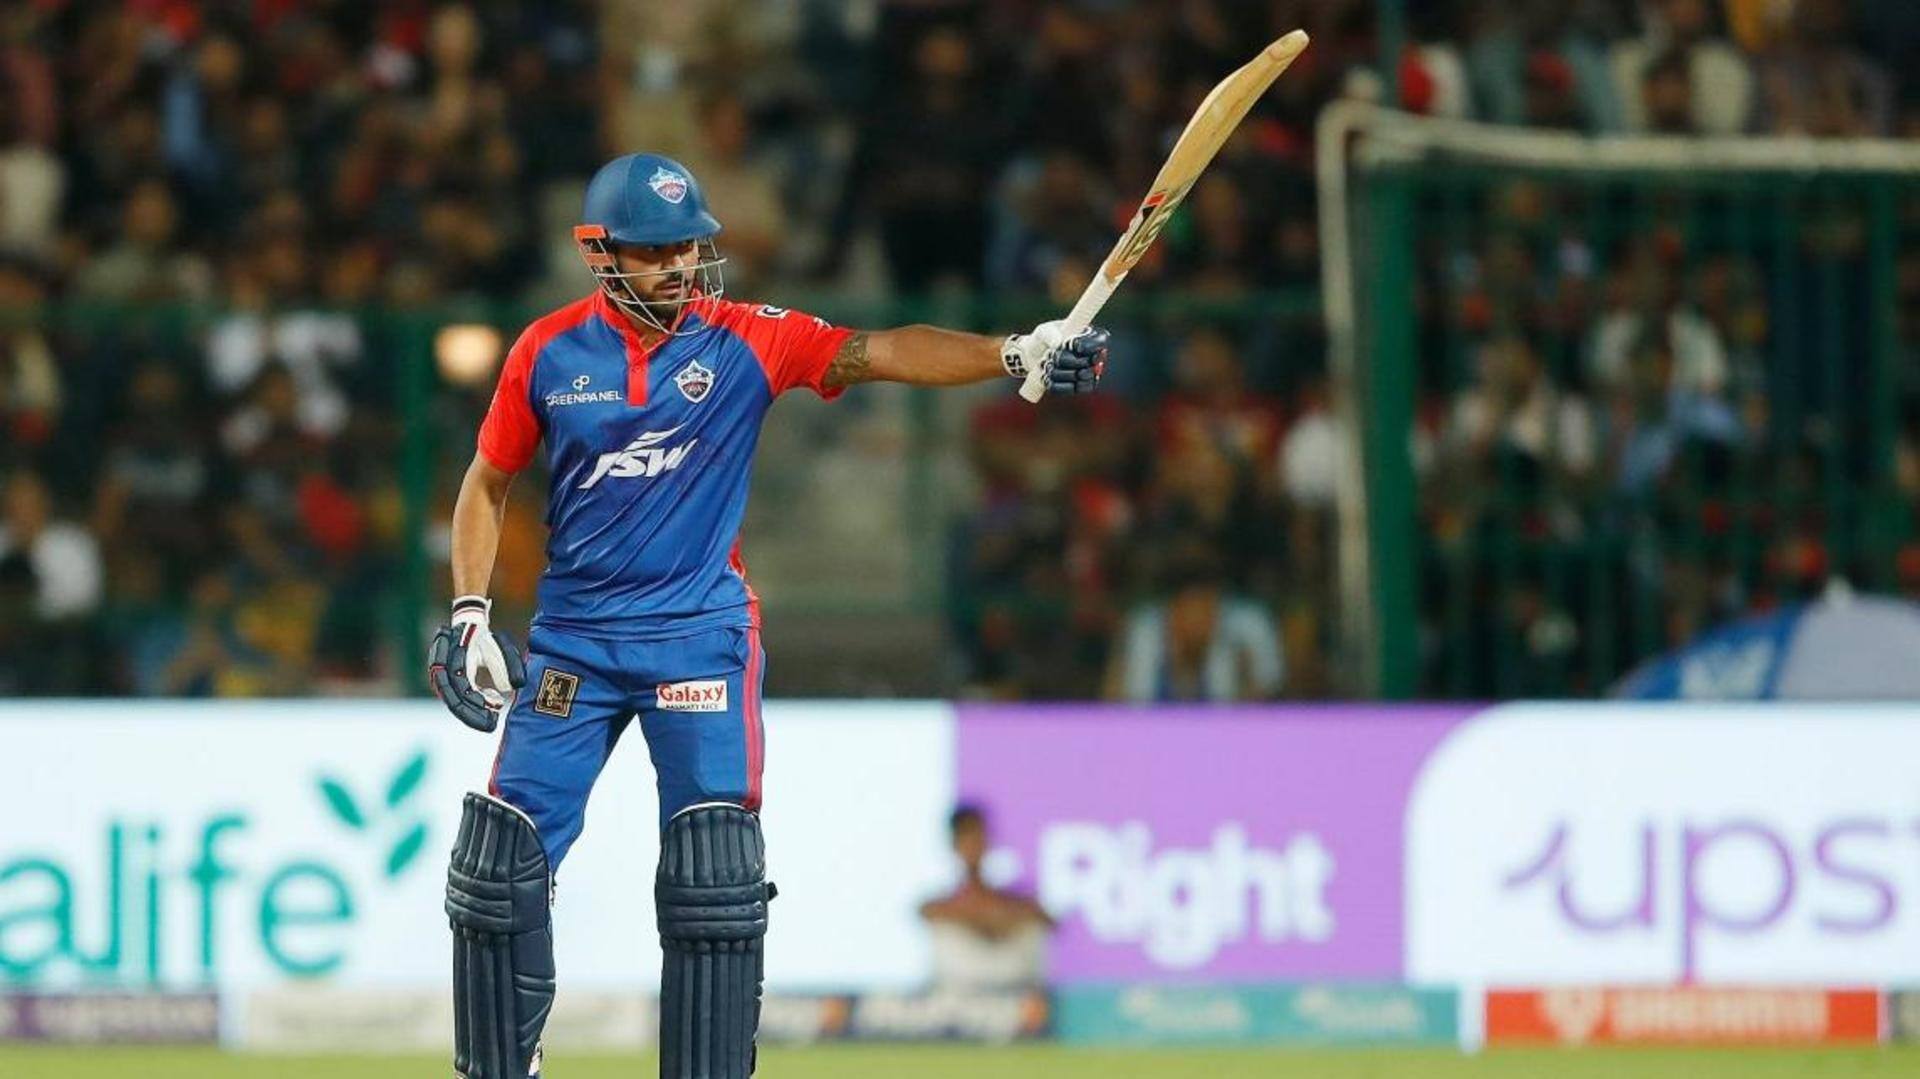 Manish Pandey clocks his 22nd IPL fifty: Key stats